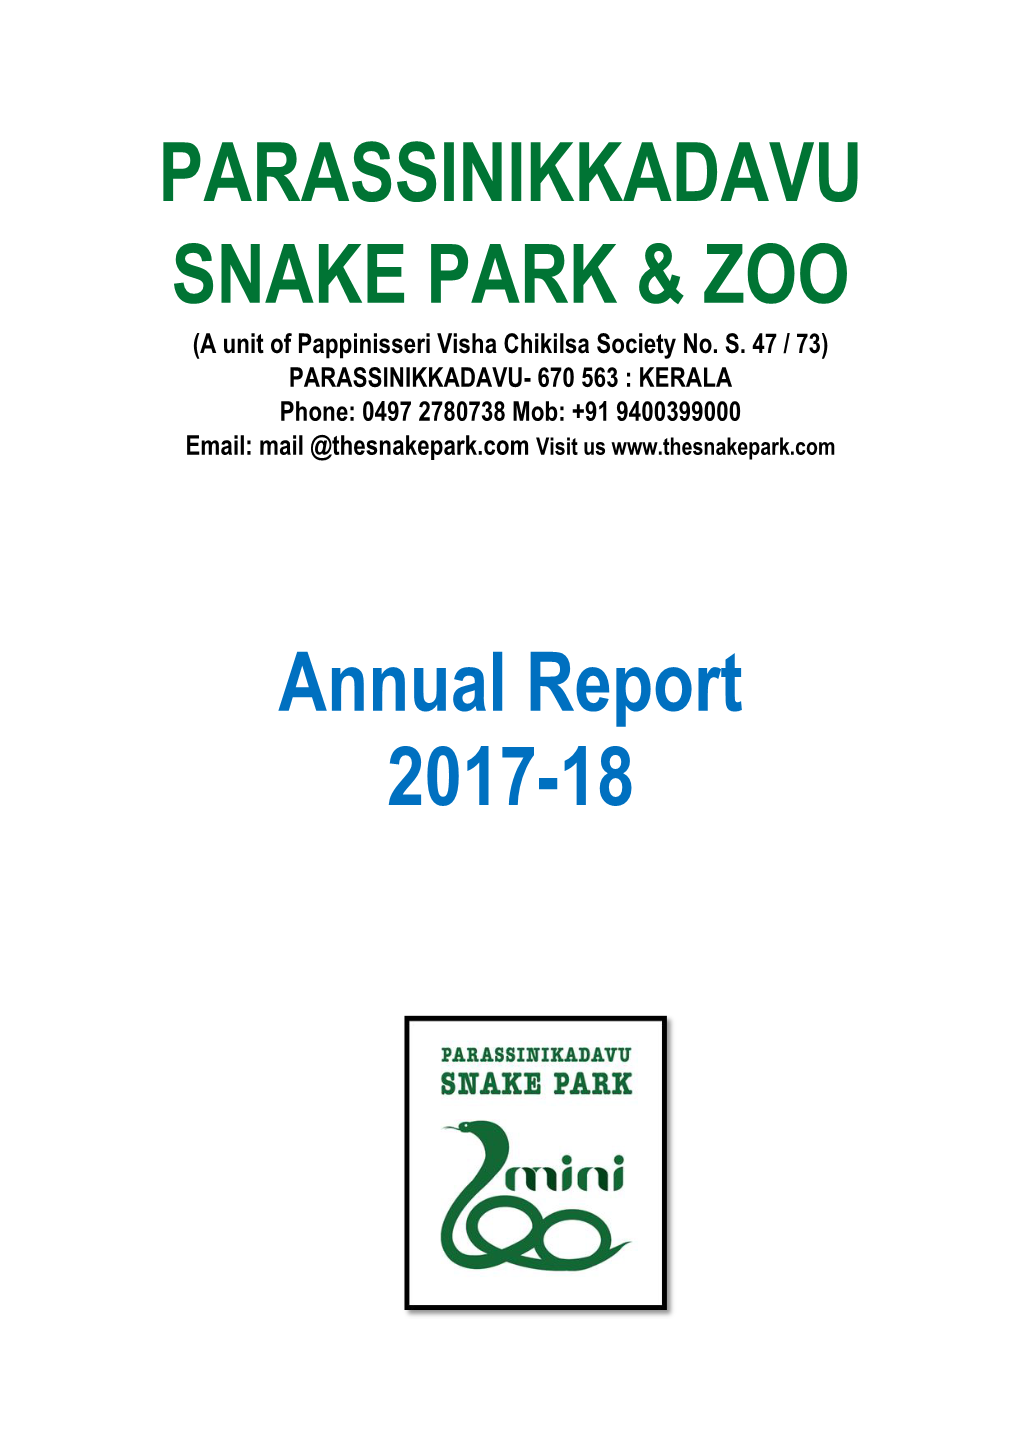 PARASSINIKKADAVU SNAKE PARK & ZOO Annual Report 2017-18